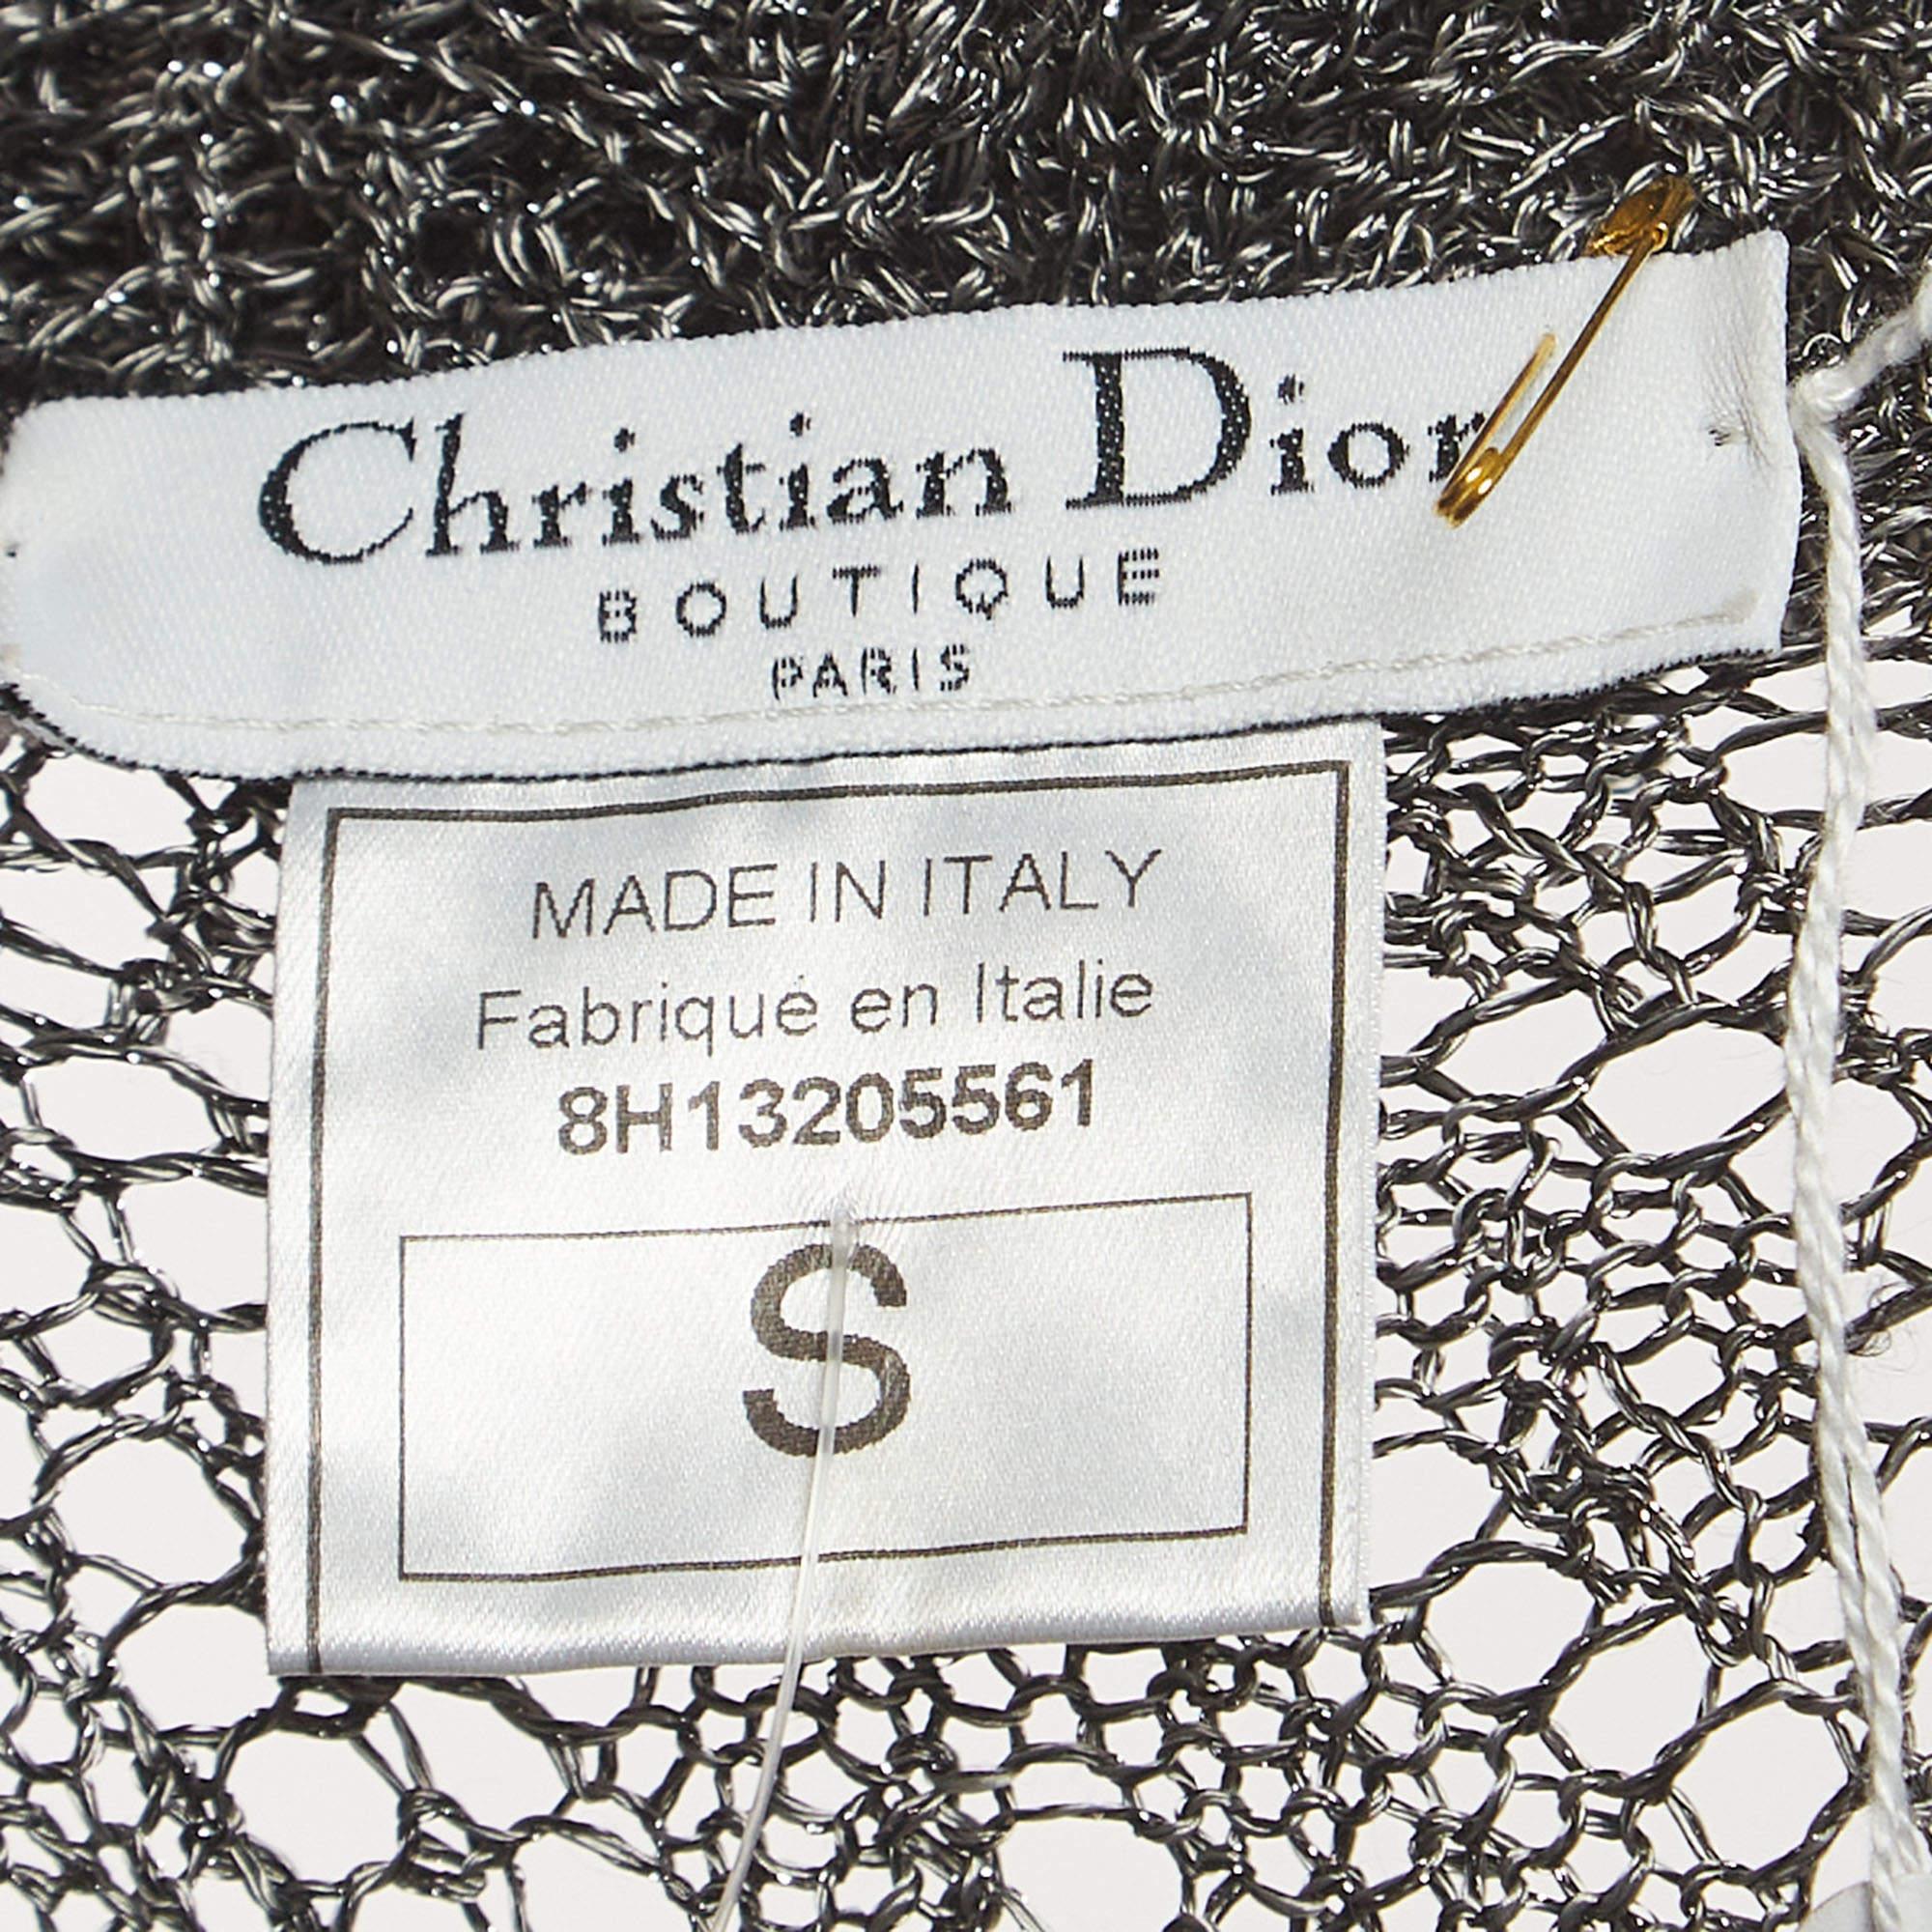 Christian Dior Boutique Grey Crochet Knit Snug Hood Neck Mini Dress S In Good Condition For Sale In Dubai, Al Qouz 2